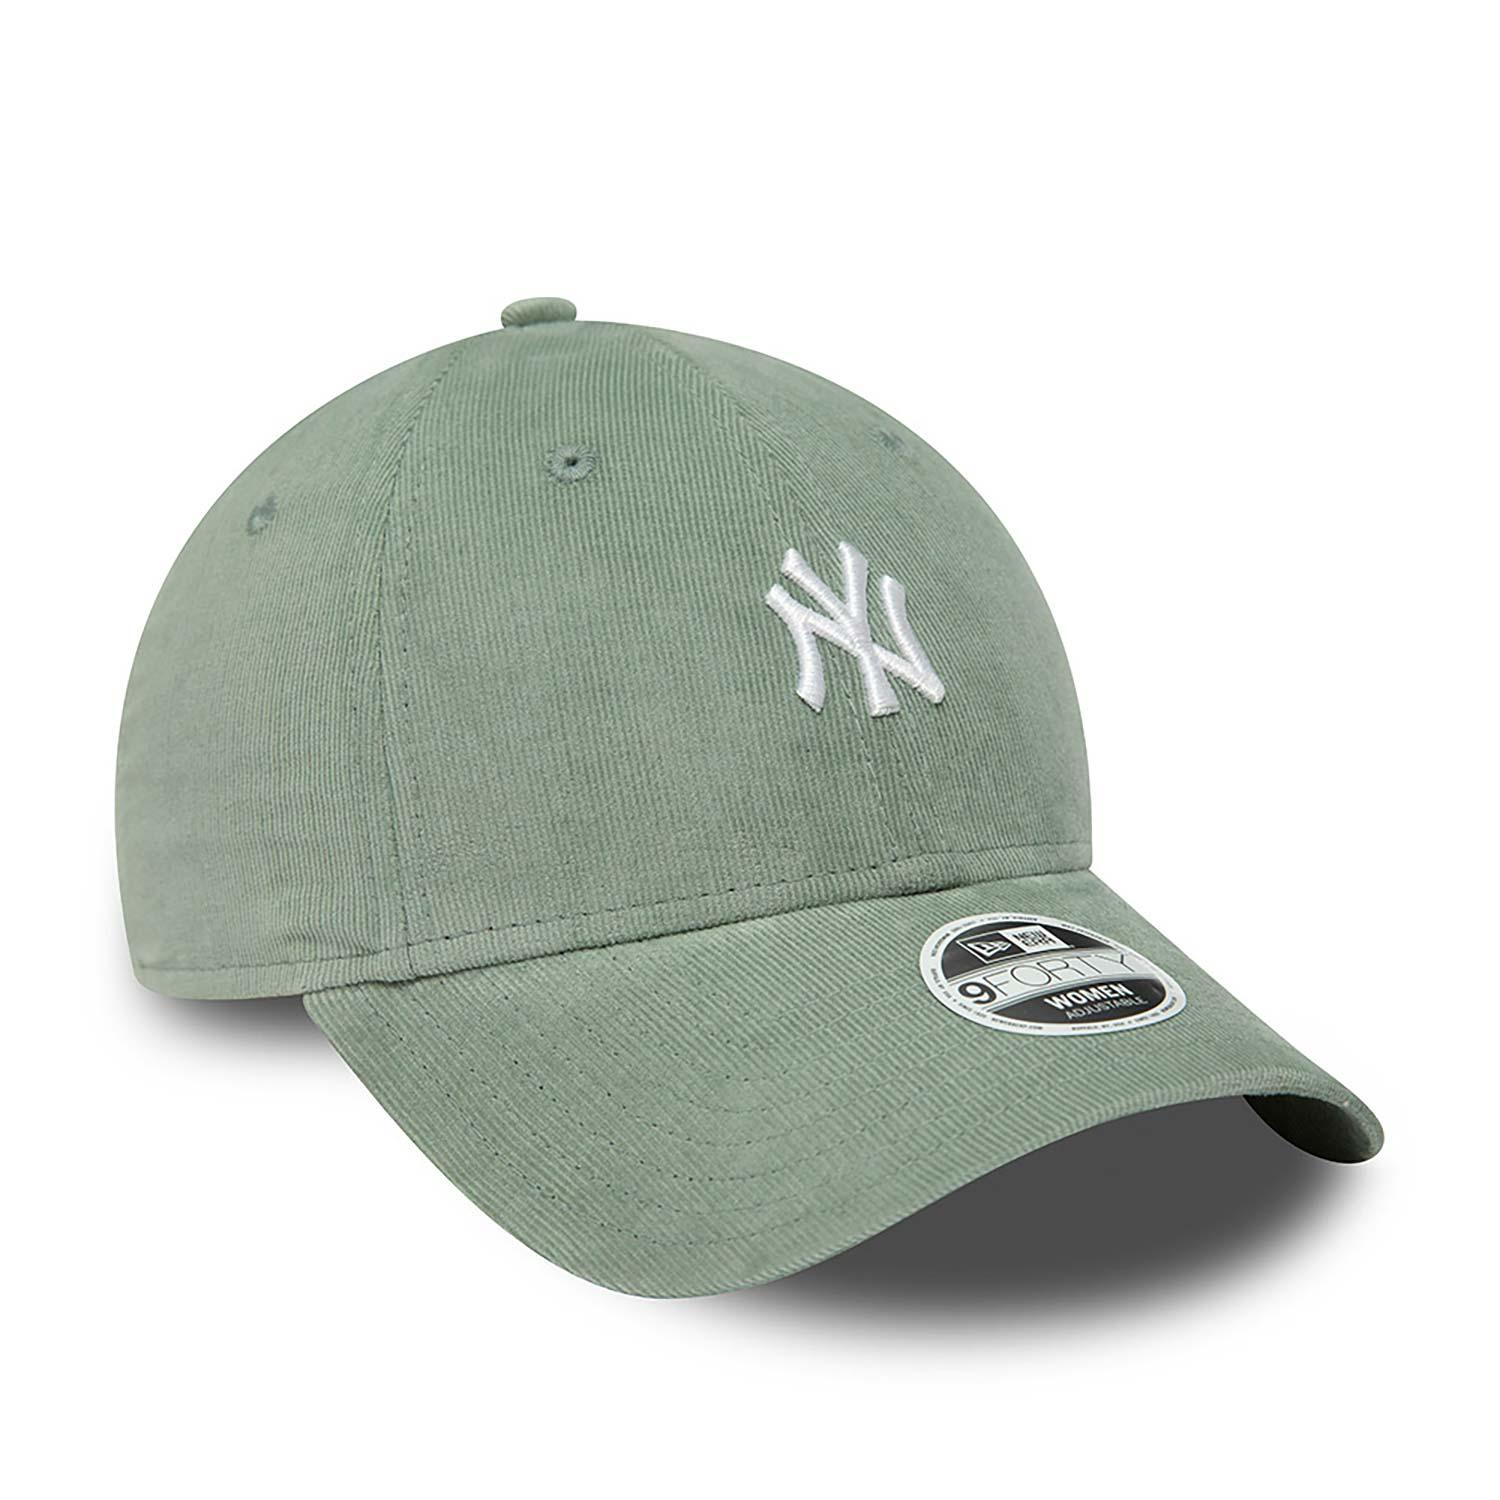 New Era - New York Yankees - Women's 9FORTY Cap - Pine Green